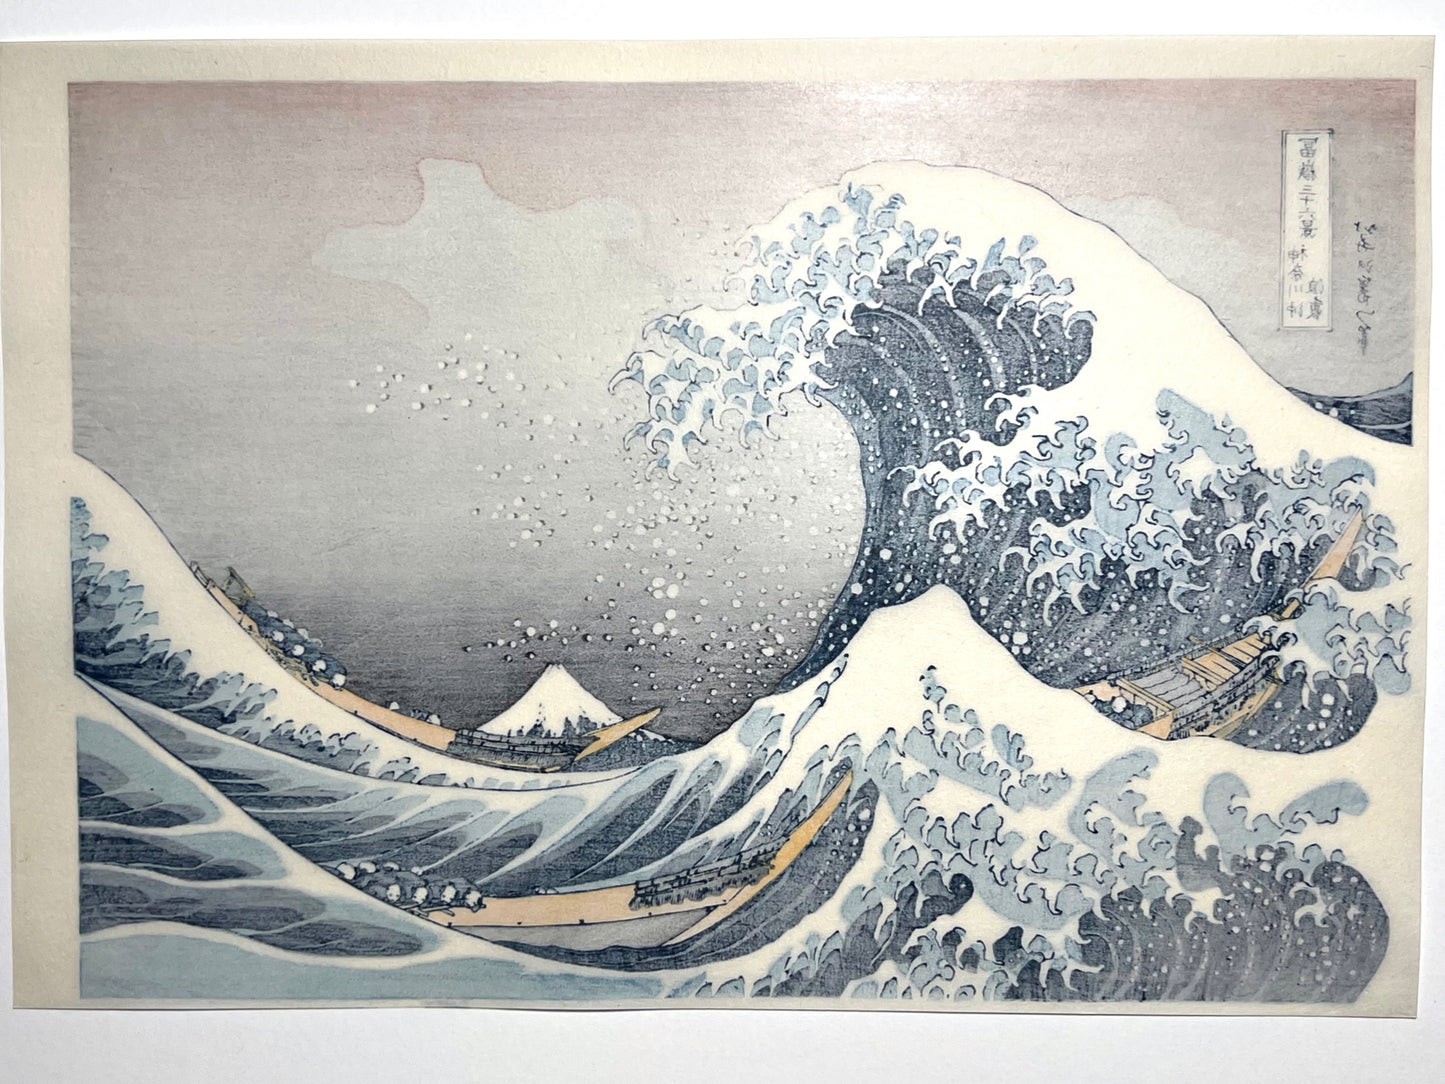 Estampe Japonaise de Hokusai | La Grande Vague de Kanagawa